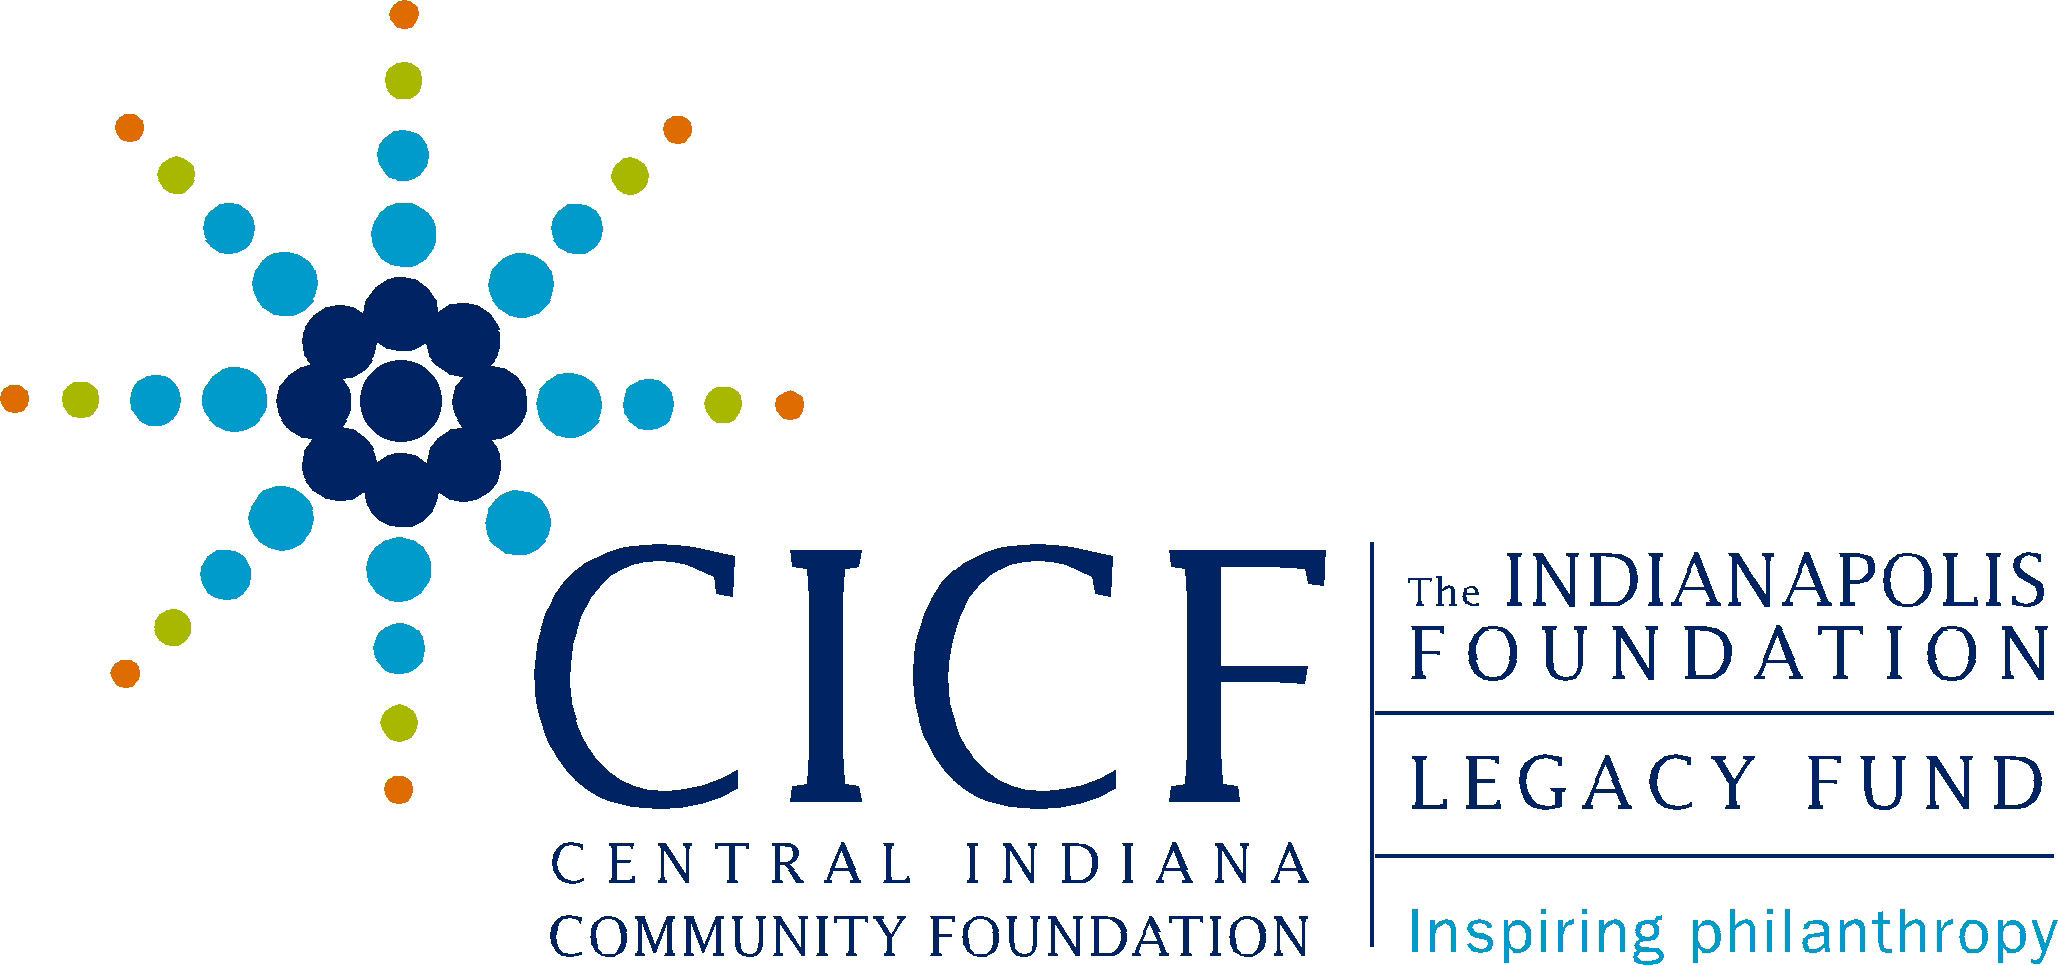 CICF logo